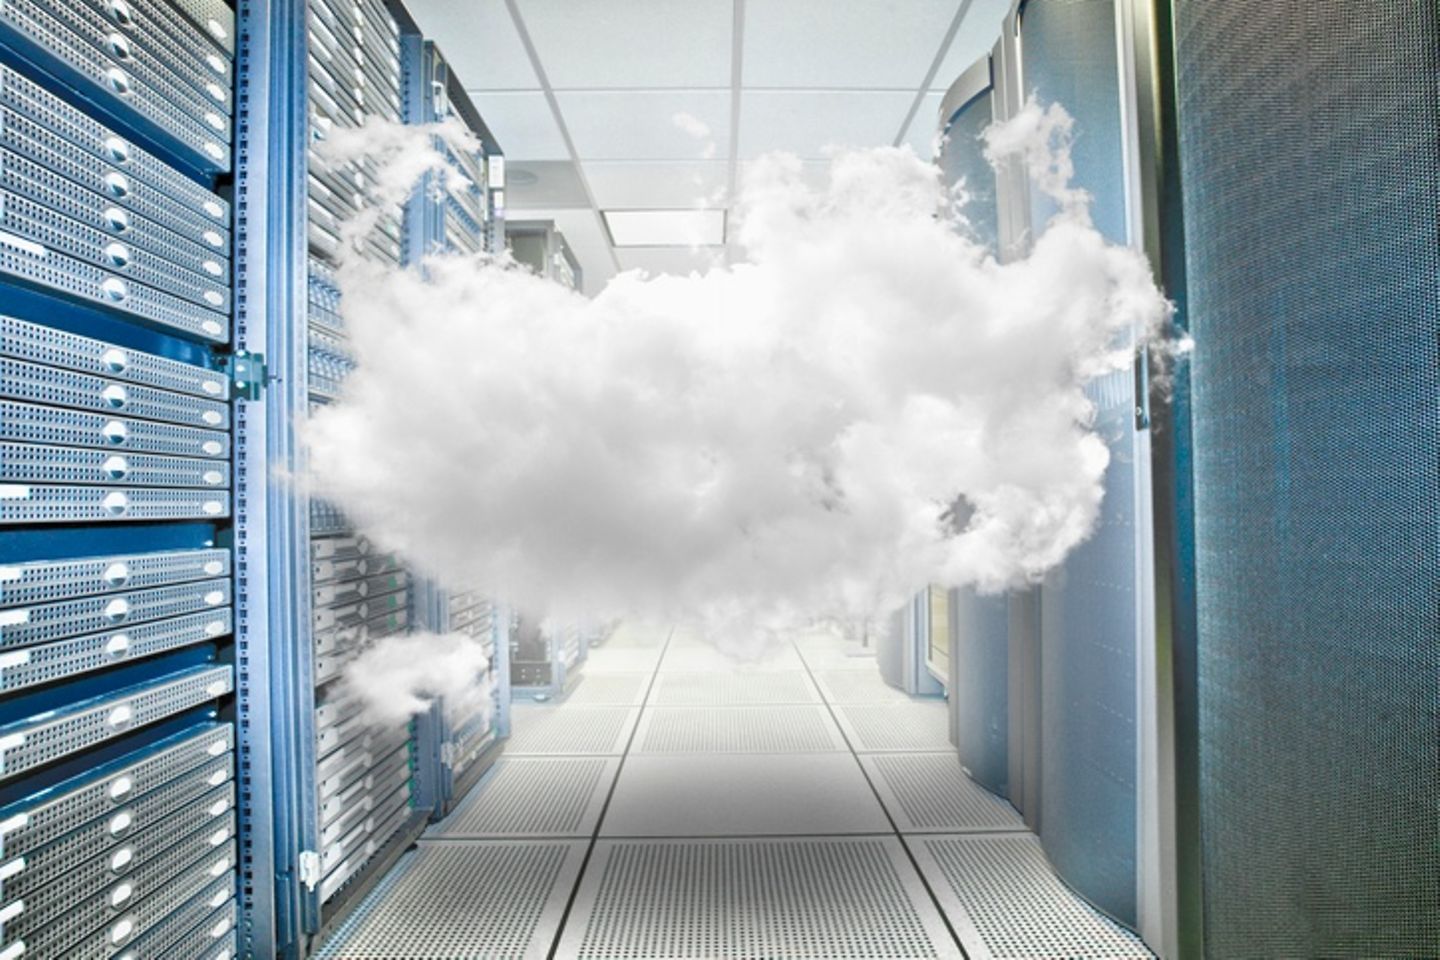 Cloud hanging between racks in server room.